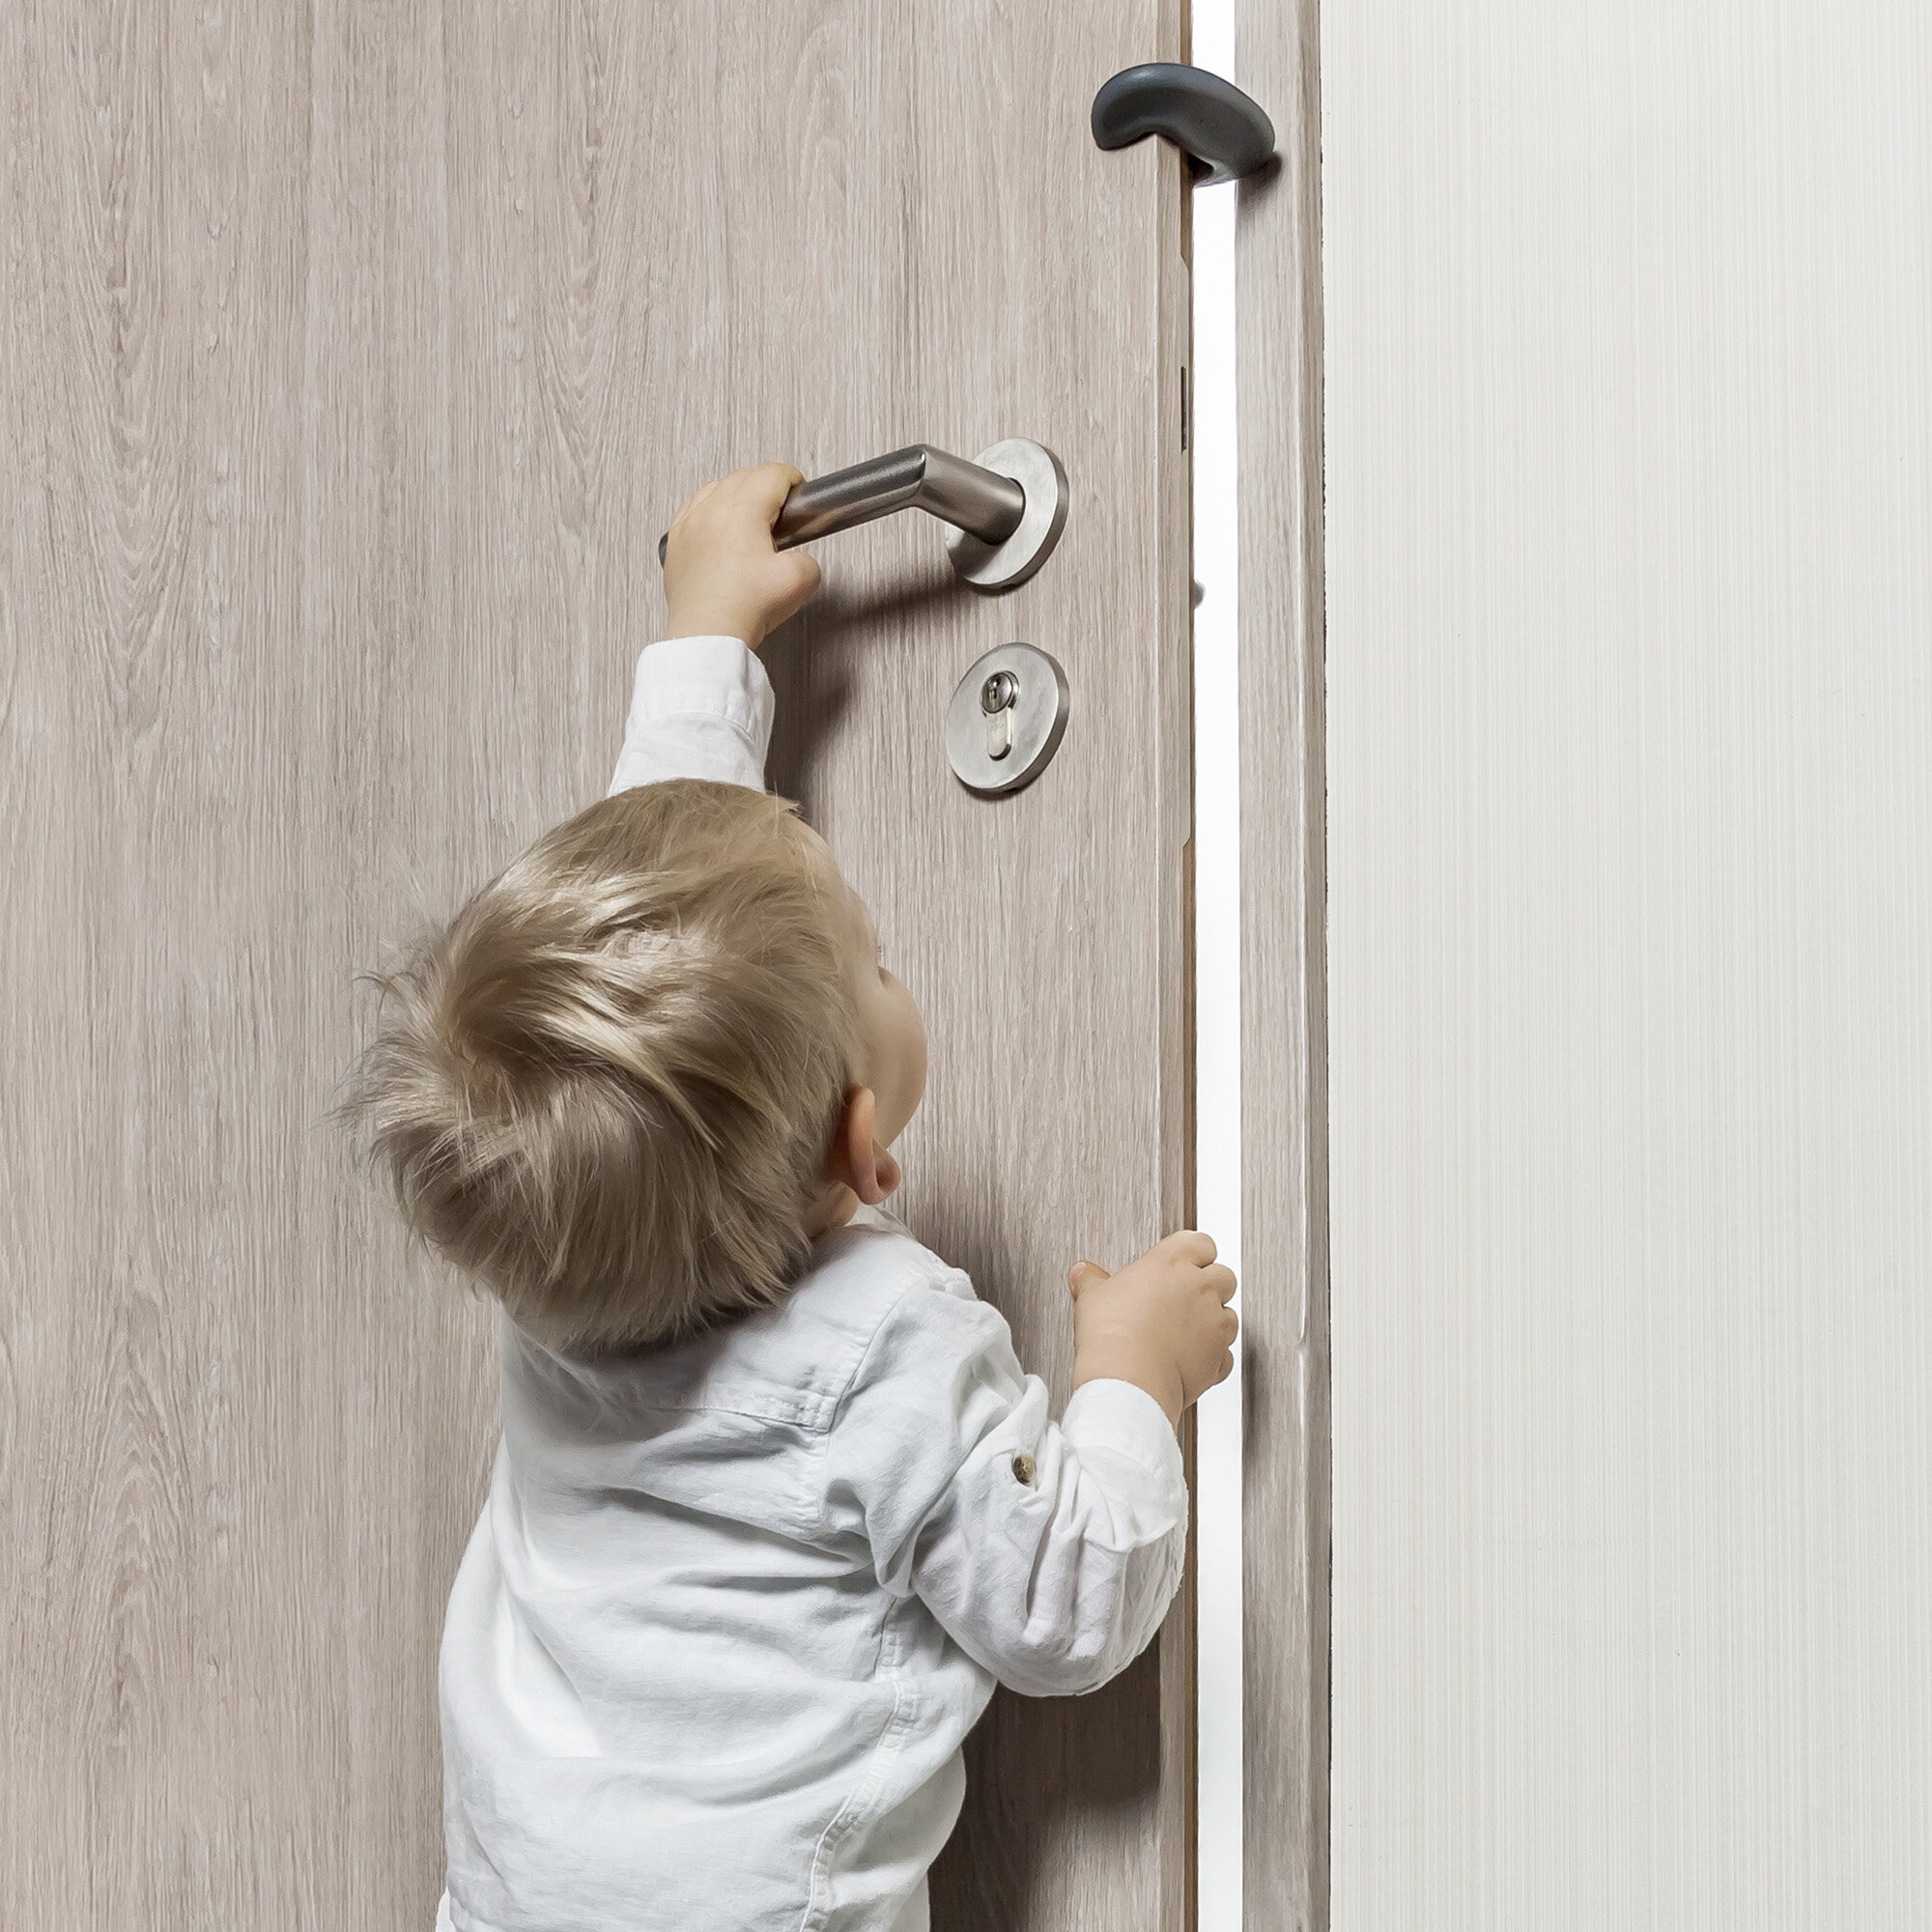 Slamming Door Prevent Finger Pinch Injuries Walbest Door Slam Stopper Baby Door Stopper Finger Pinch Guard Door Slam Preventer and Child or Pet from Getting Locked in Room 2 